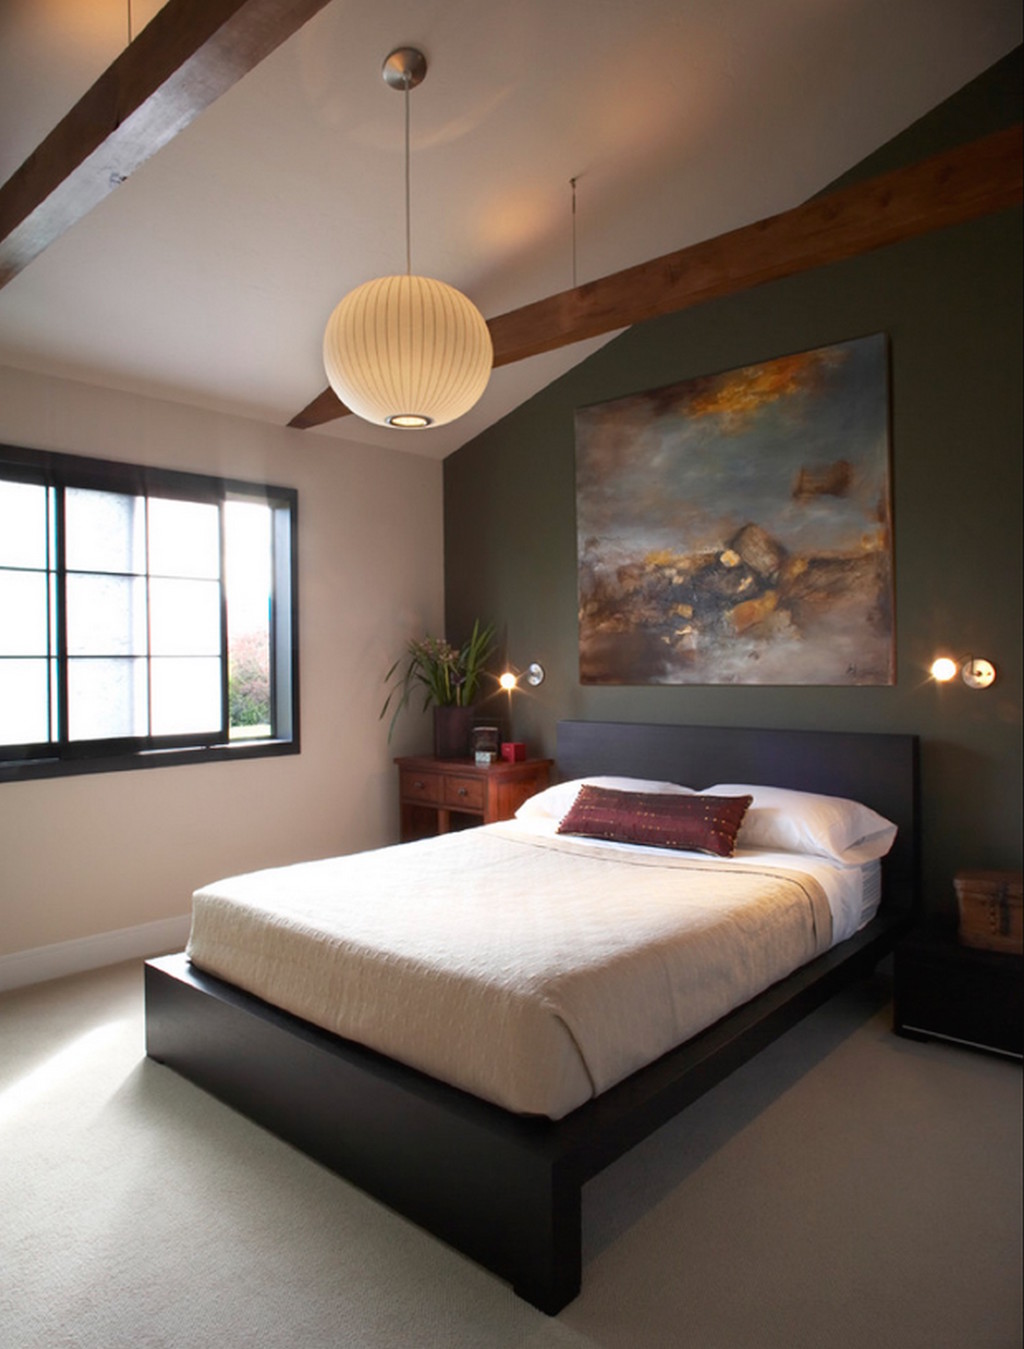 Woven Ball Pendant Light for Bedroom Design with Sloped Ceiling Design